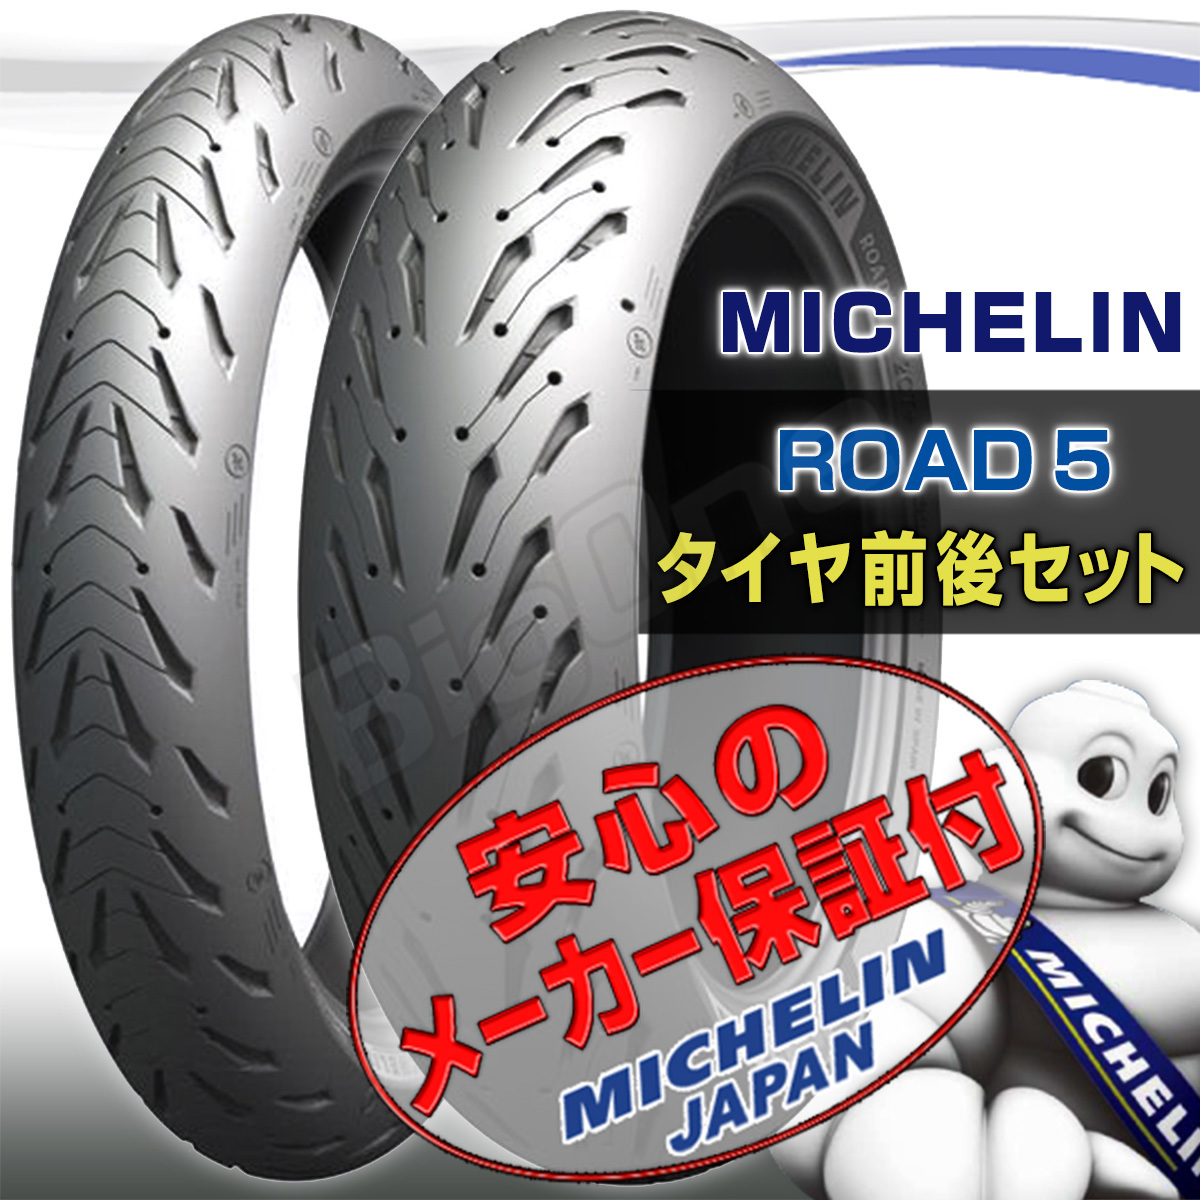 MICHELIN Road5 MT-01 MT-07 MT-09 トレーサー900 XSR900 FJR1300AS MT07 120/70ZR17 58W TL 180/55ZR17 73W TL フロント リア リヤ タイヤの画像1